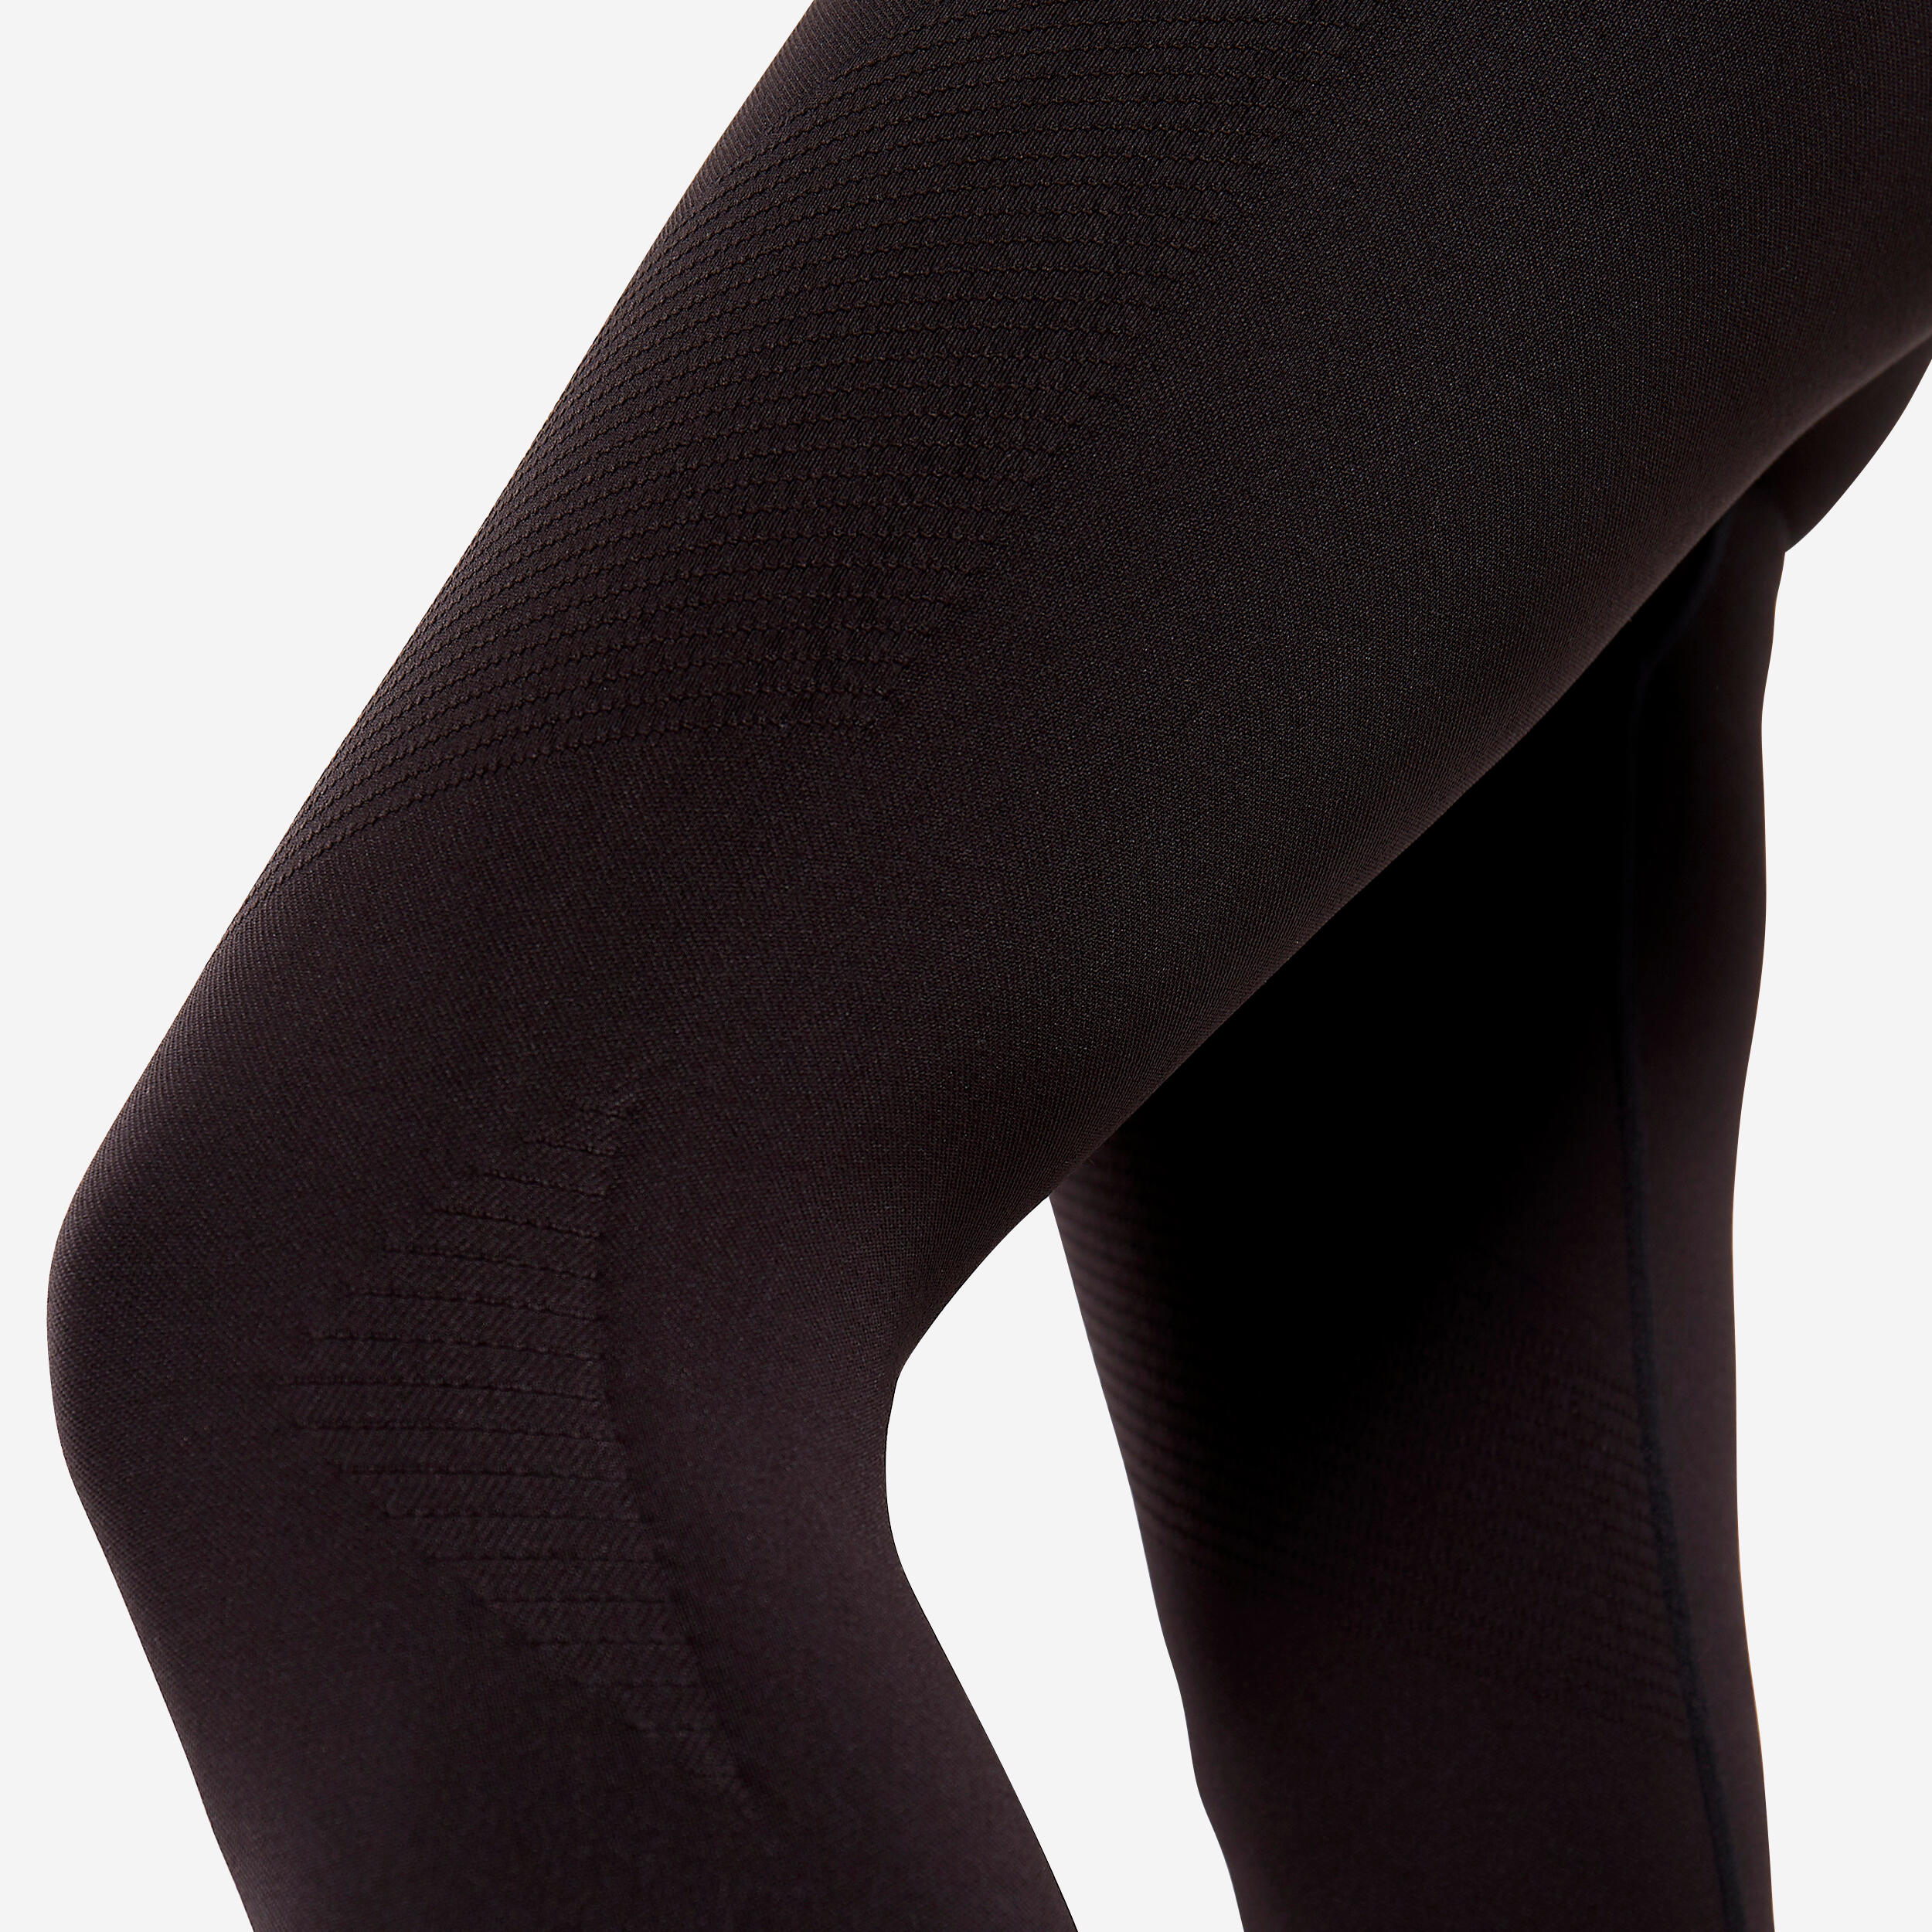 HAPIMO Women's Athletic Leggings Yoga Pants Summer Discount